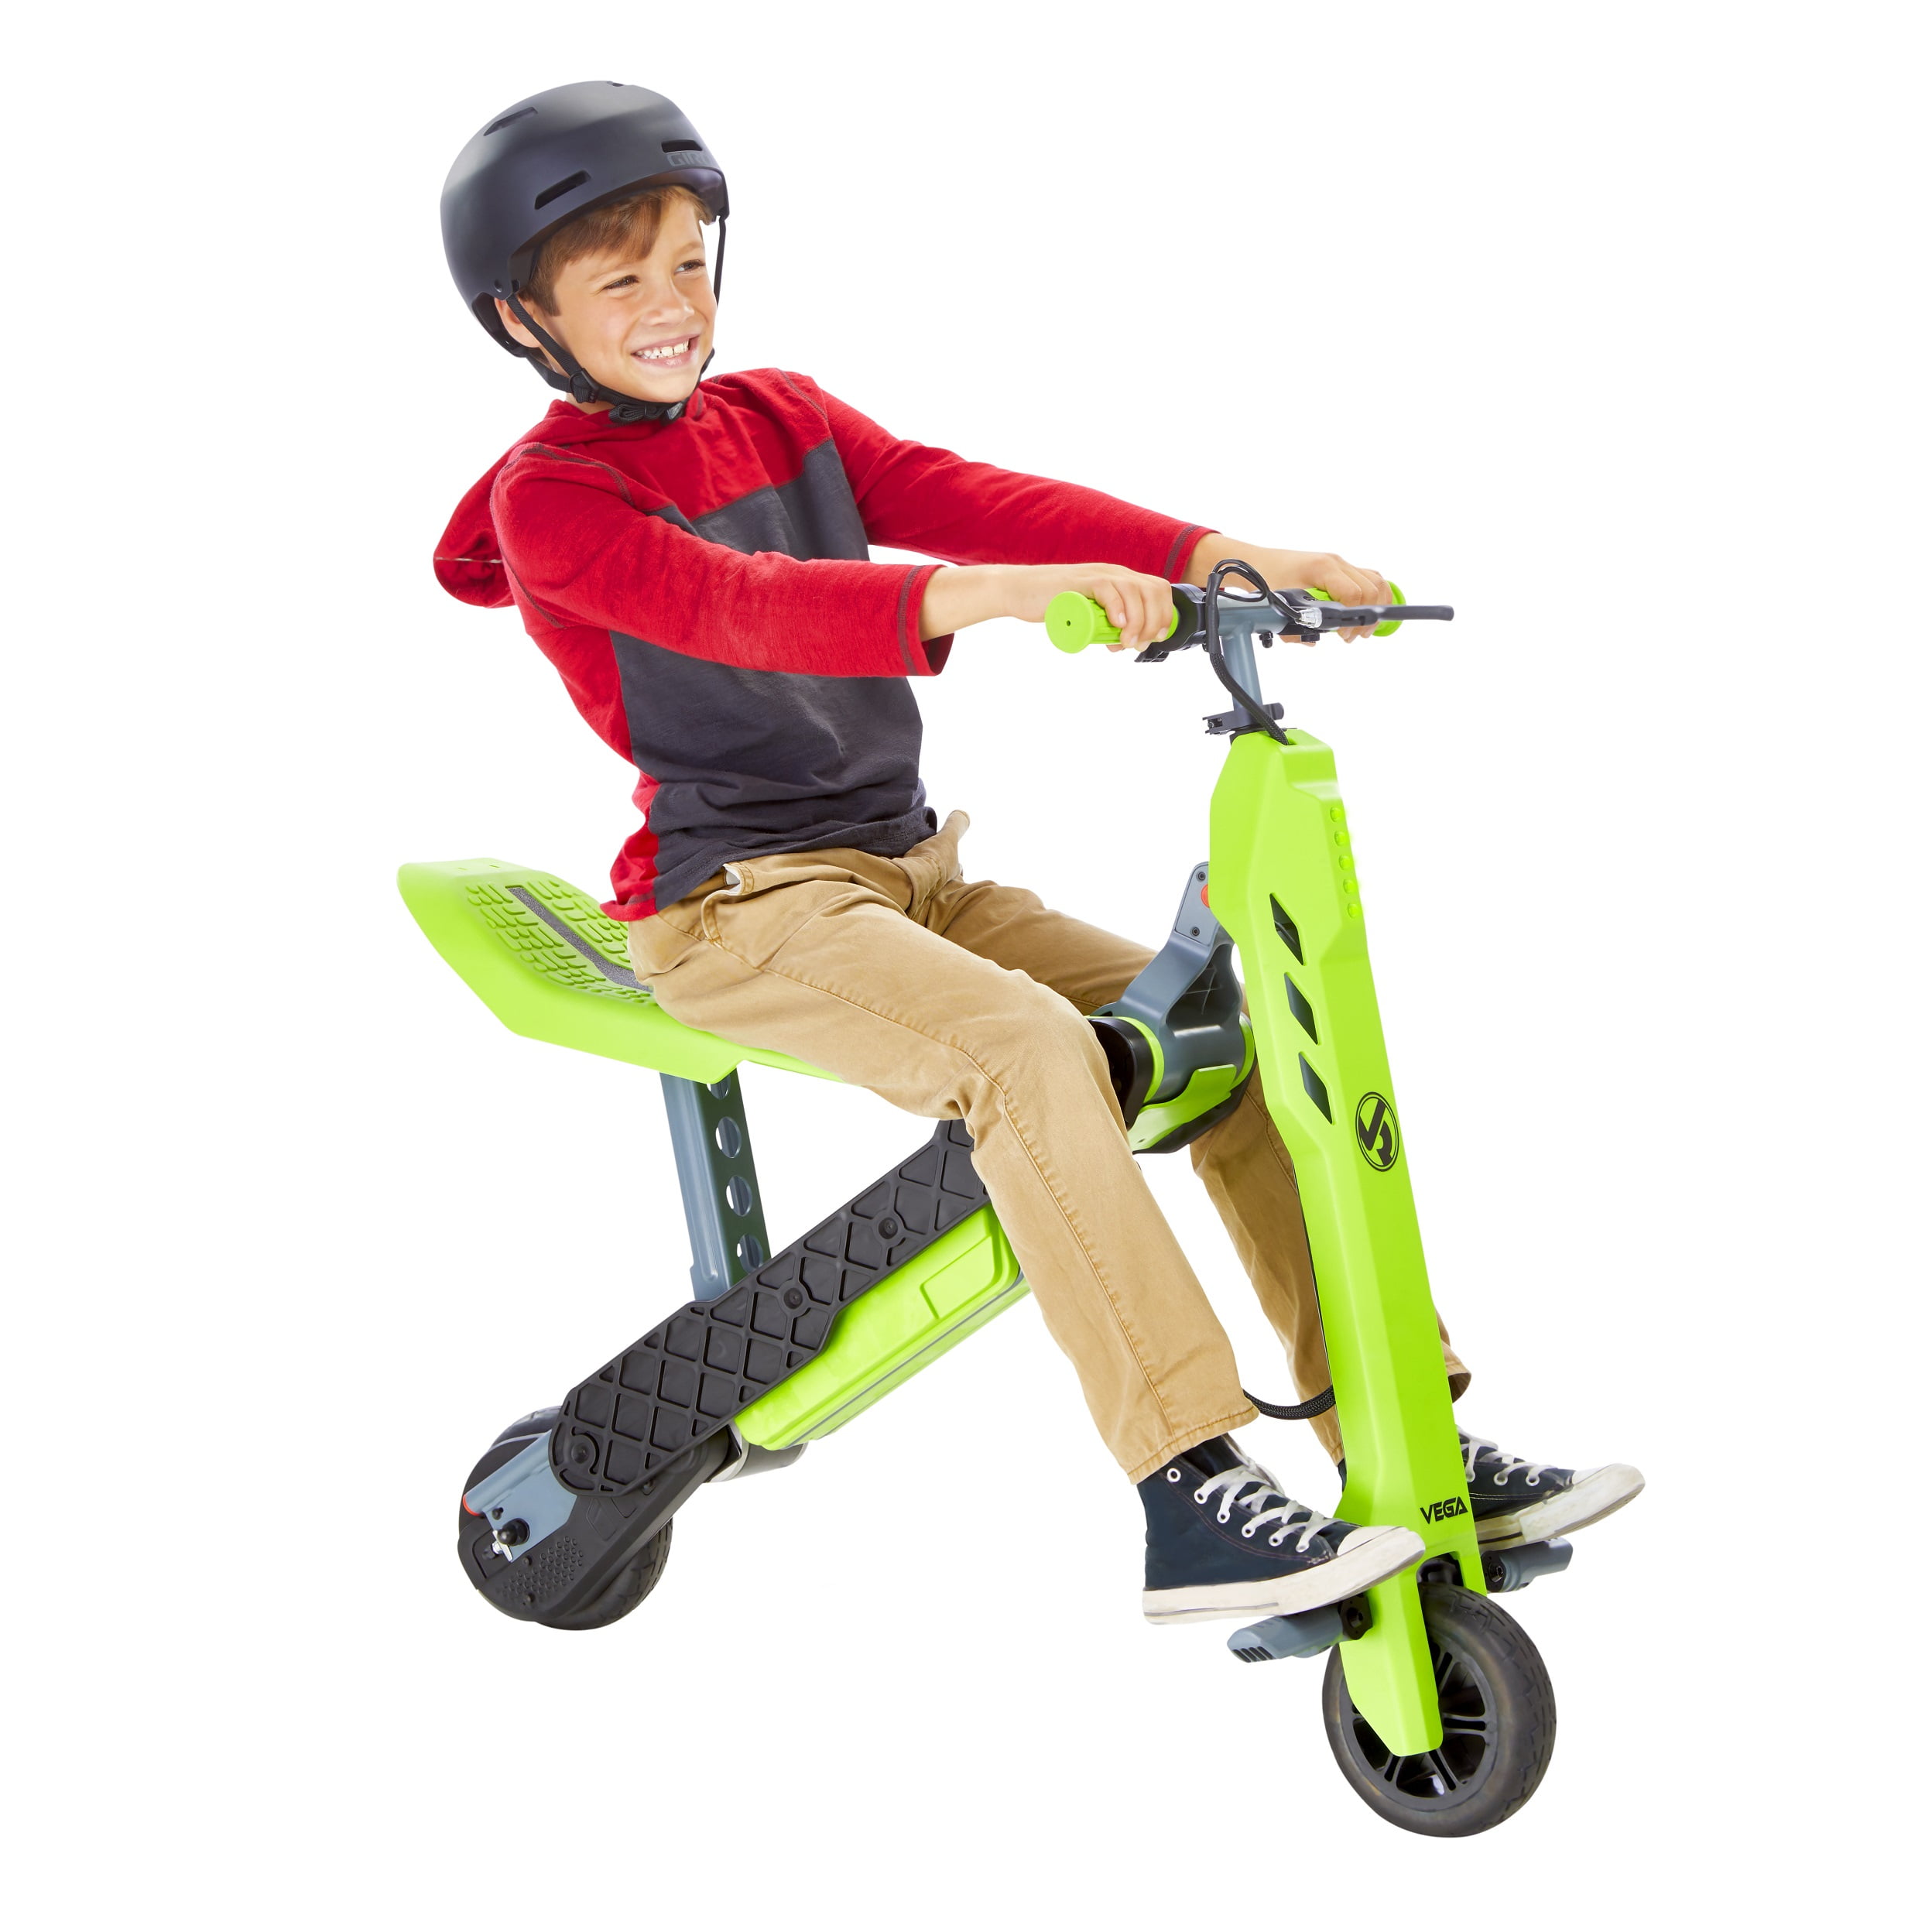 the vega scooter bike